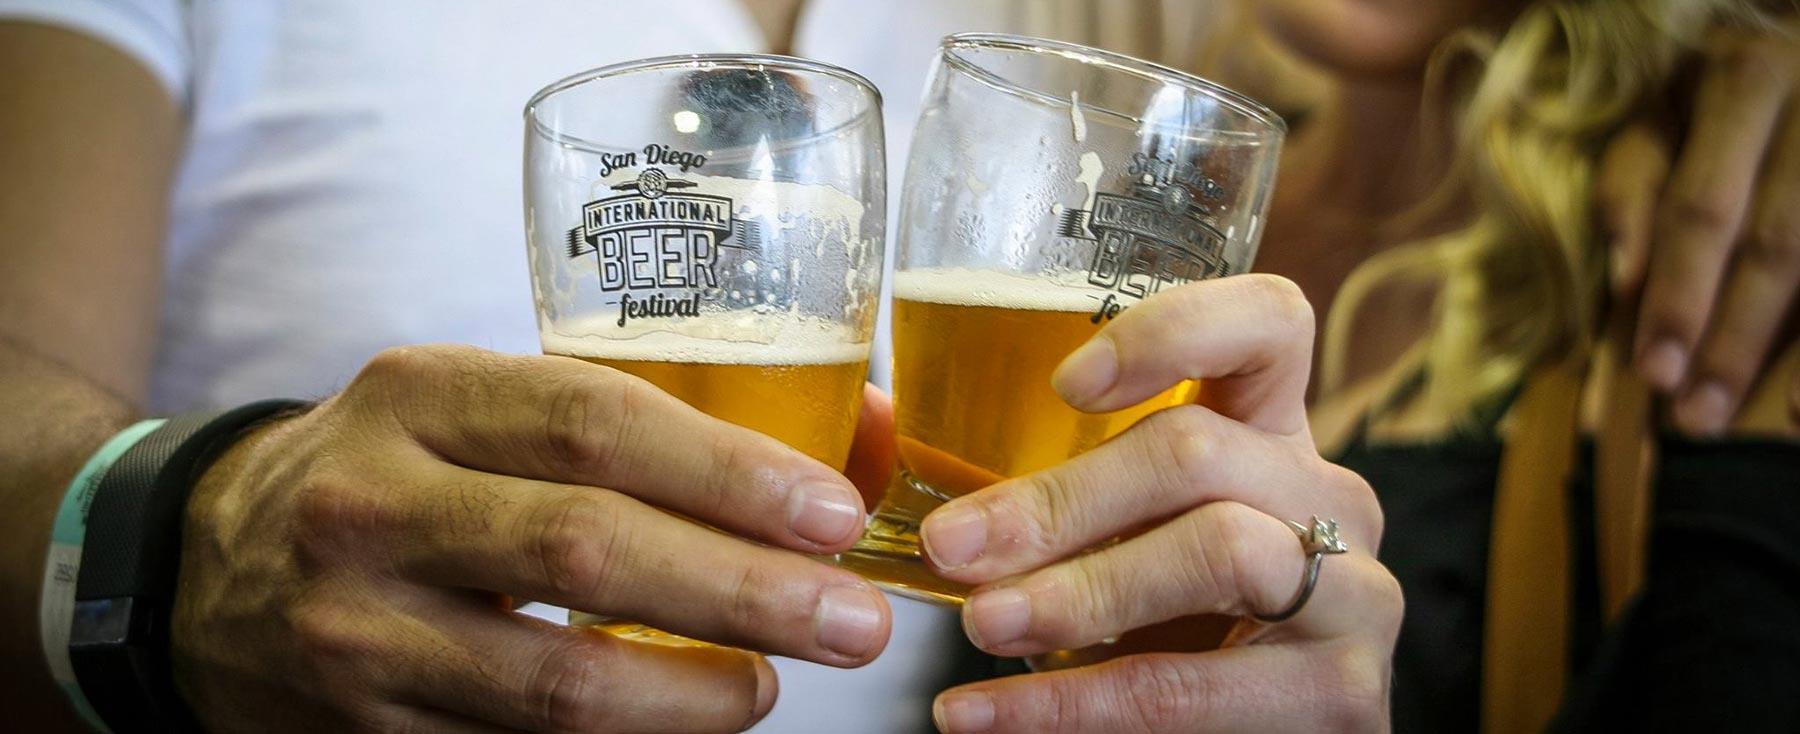 San Diego International Beer Festival